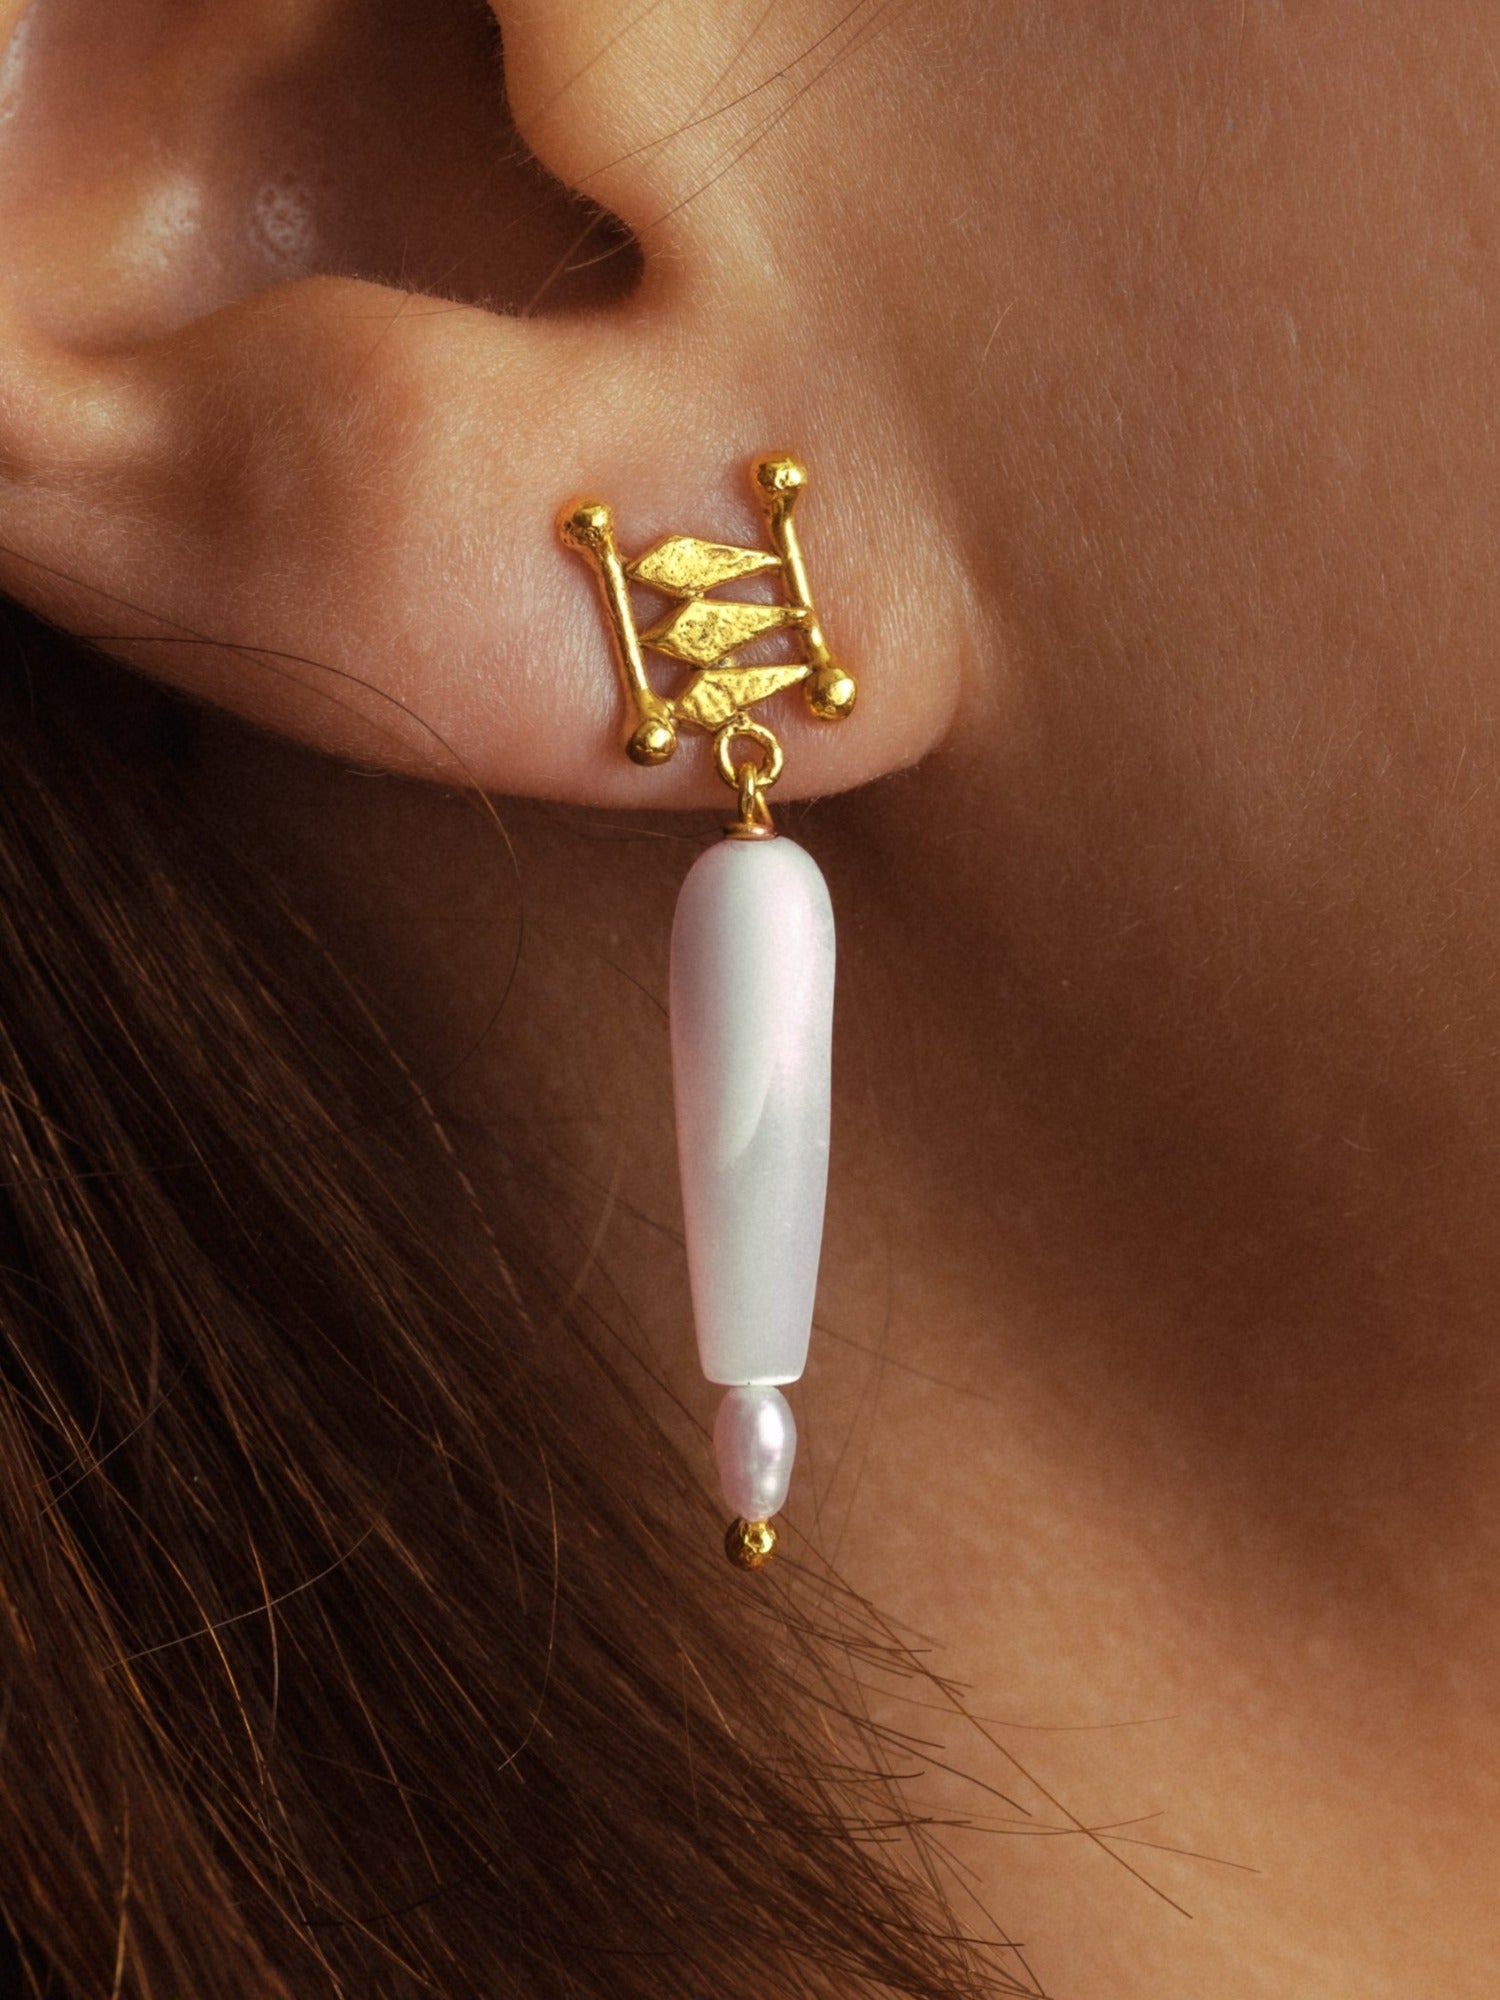 The Taeuber-Arp Earrings (pair)